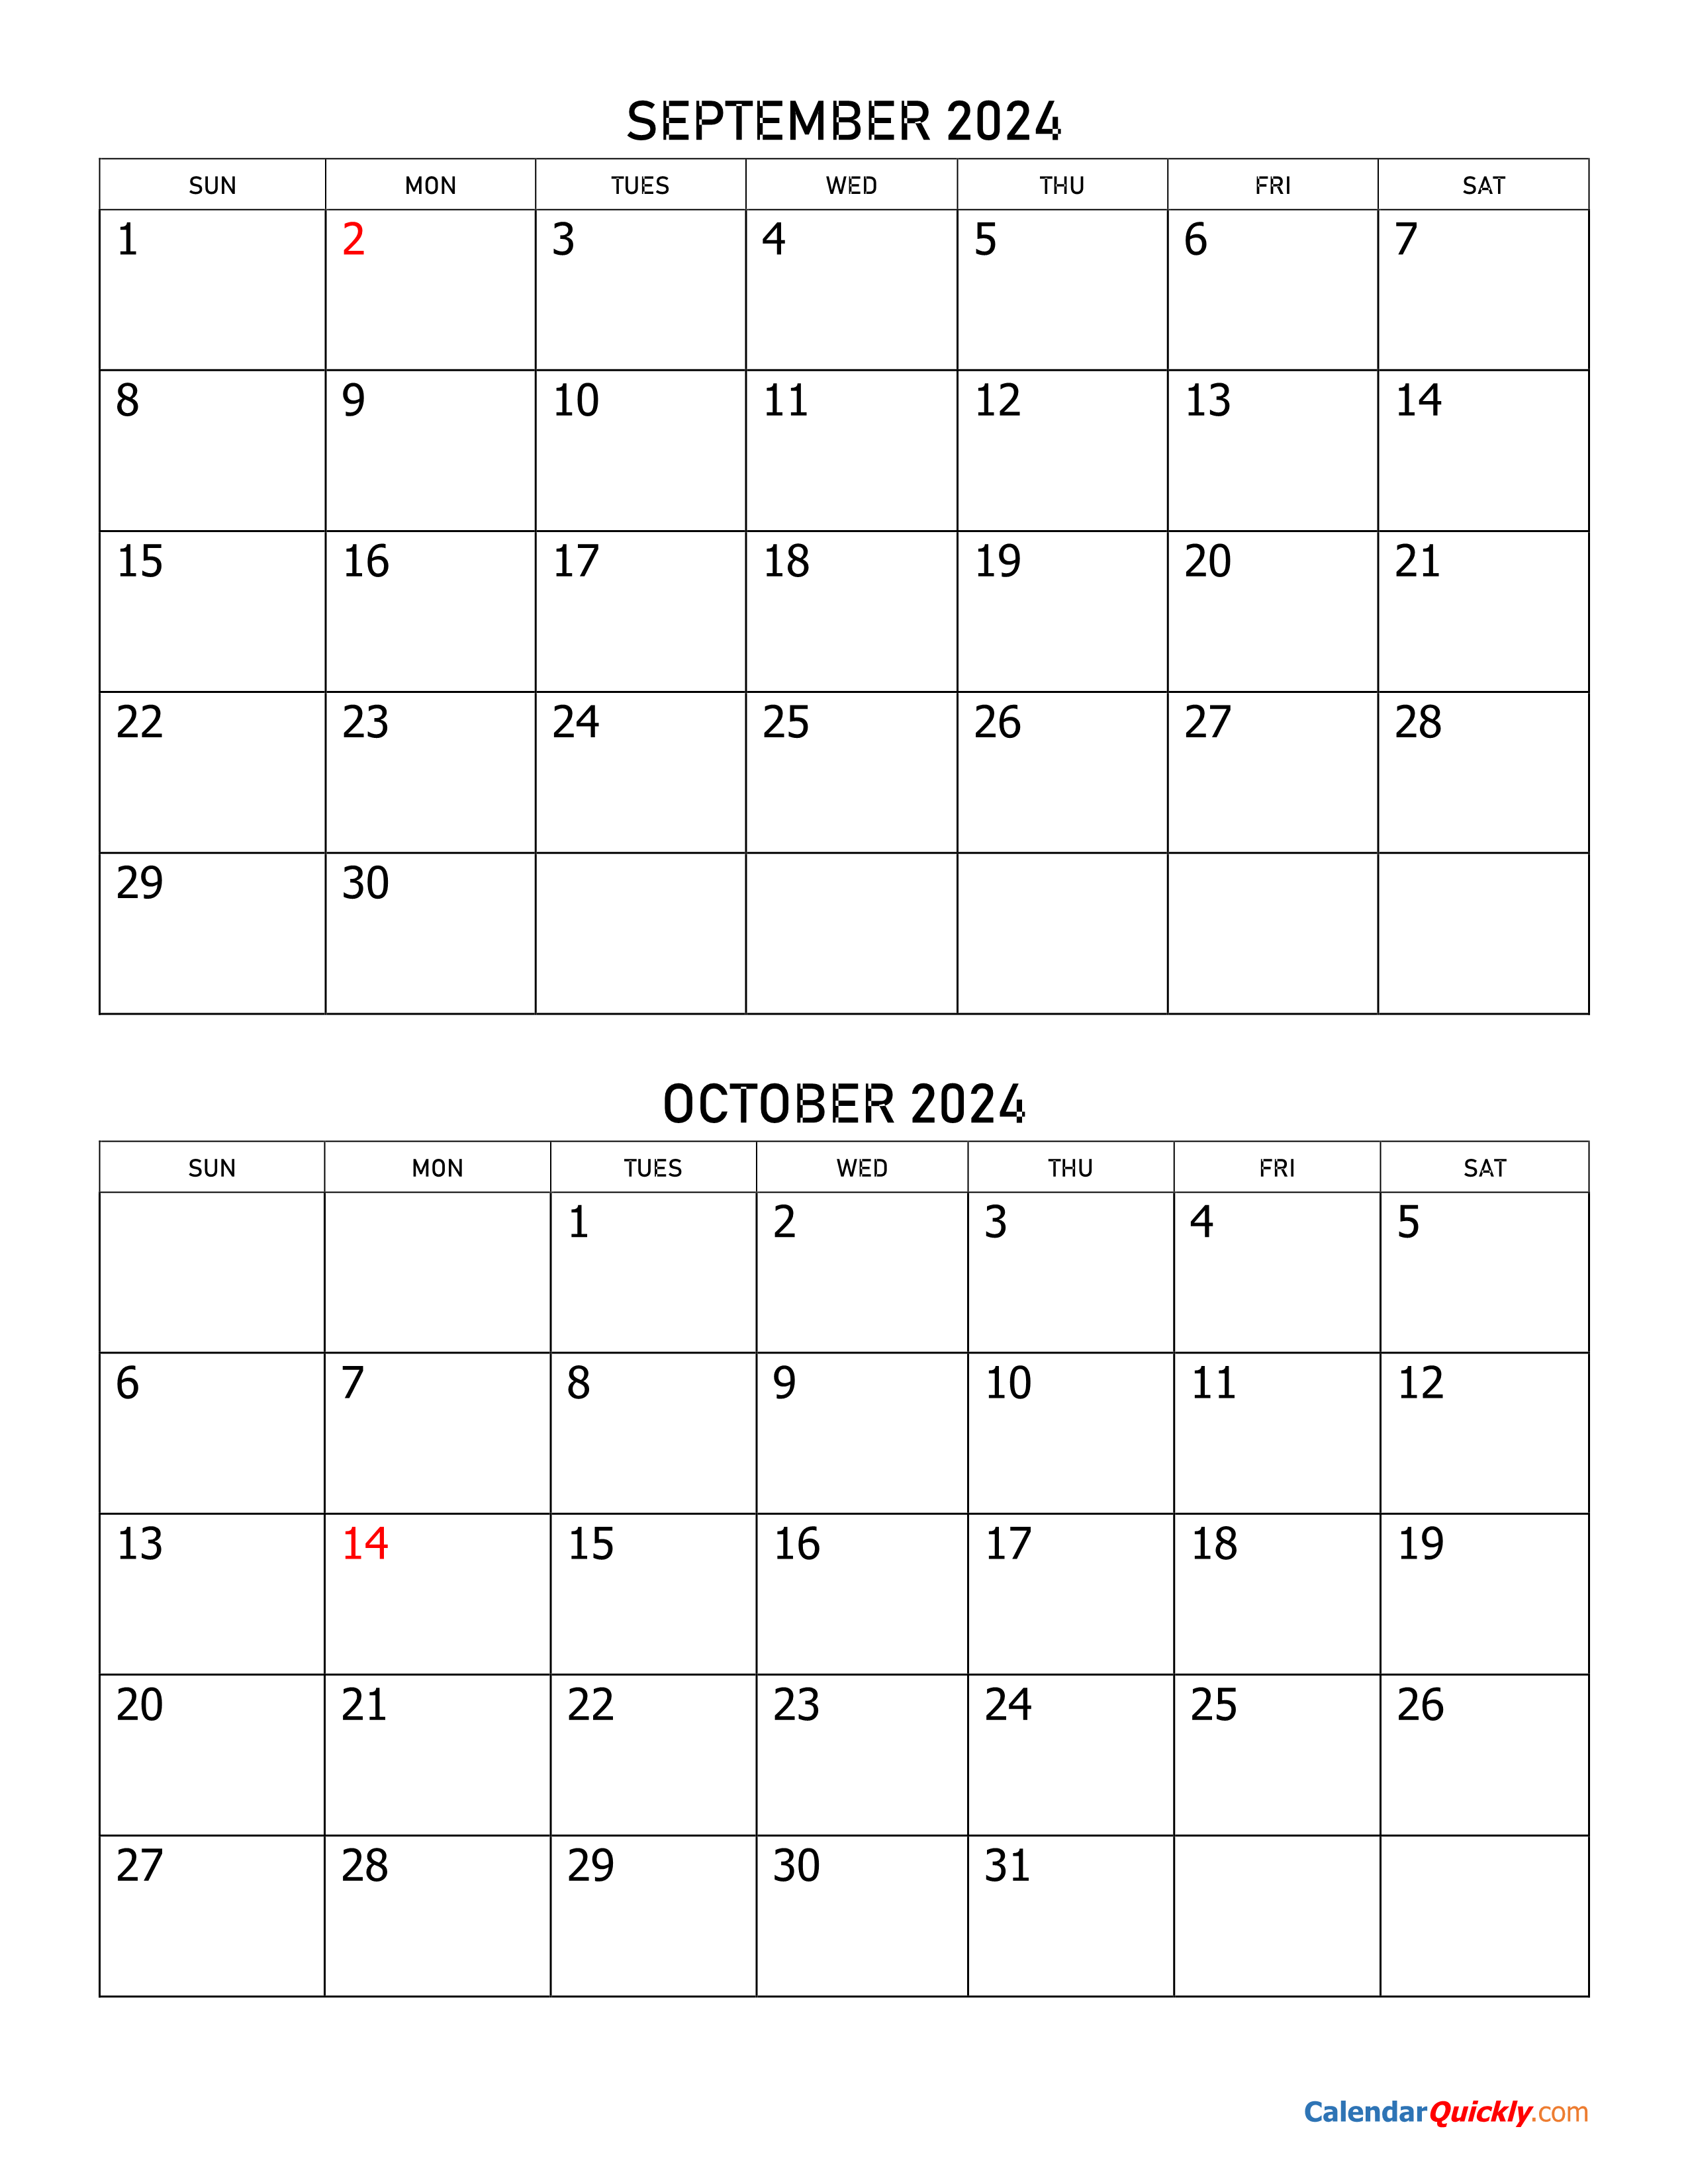 September and October 2024 Calendar | Calendar Quickly